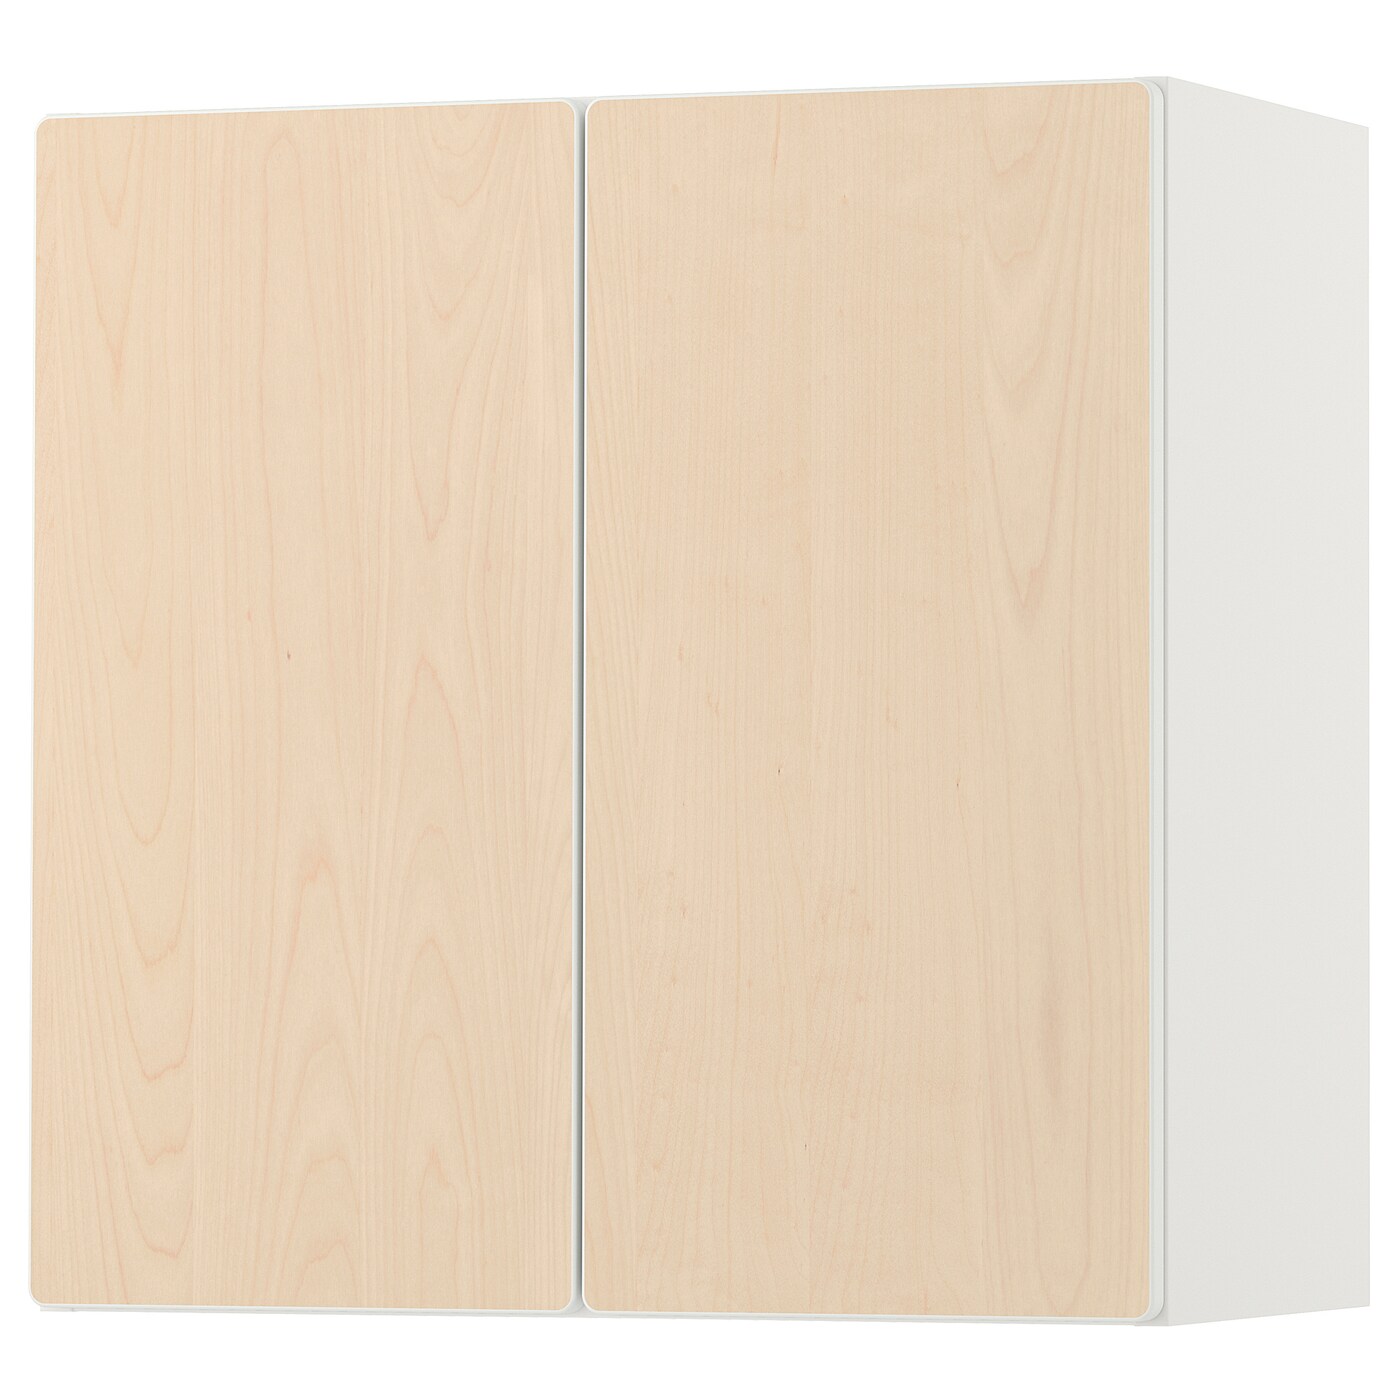 Шкаф детский - IKEA SMÅSTAD/SMASTAD, 60x30x60 см, белый/бежевый,  СМОСТАД  ИКЕА